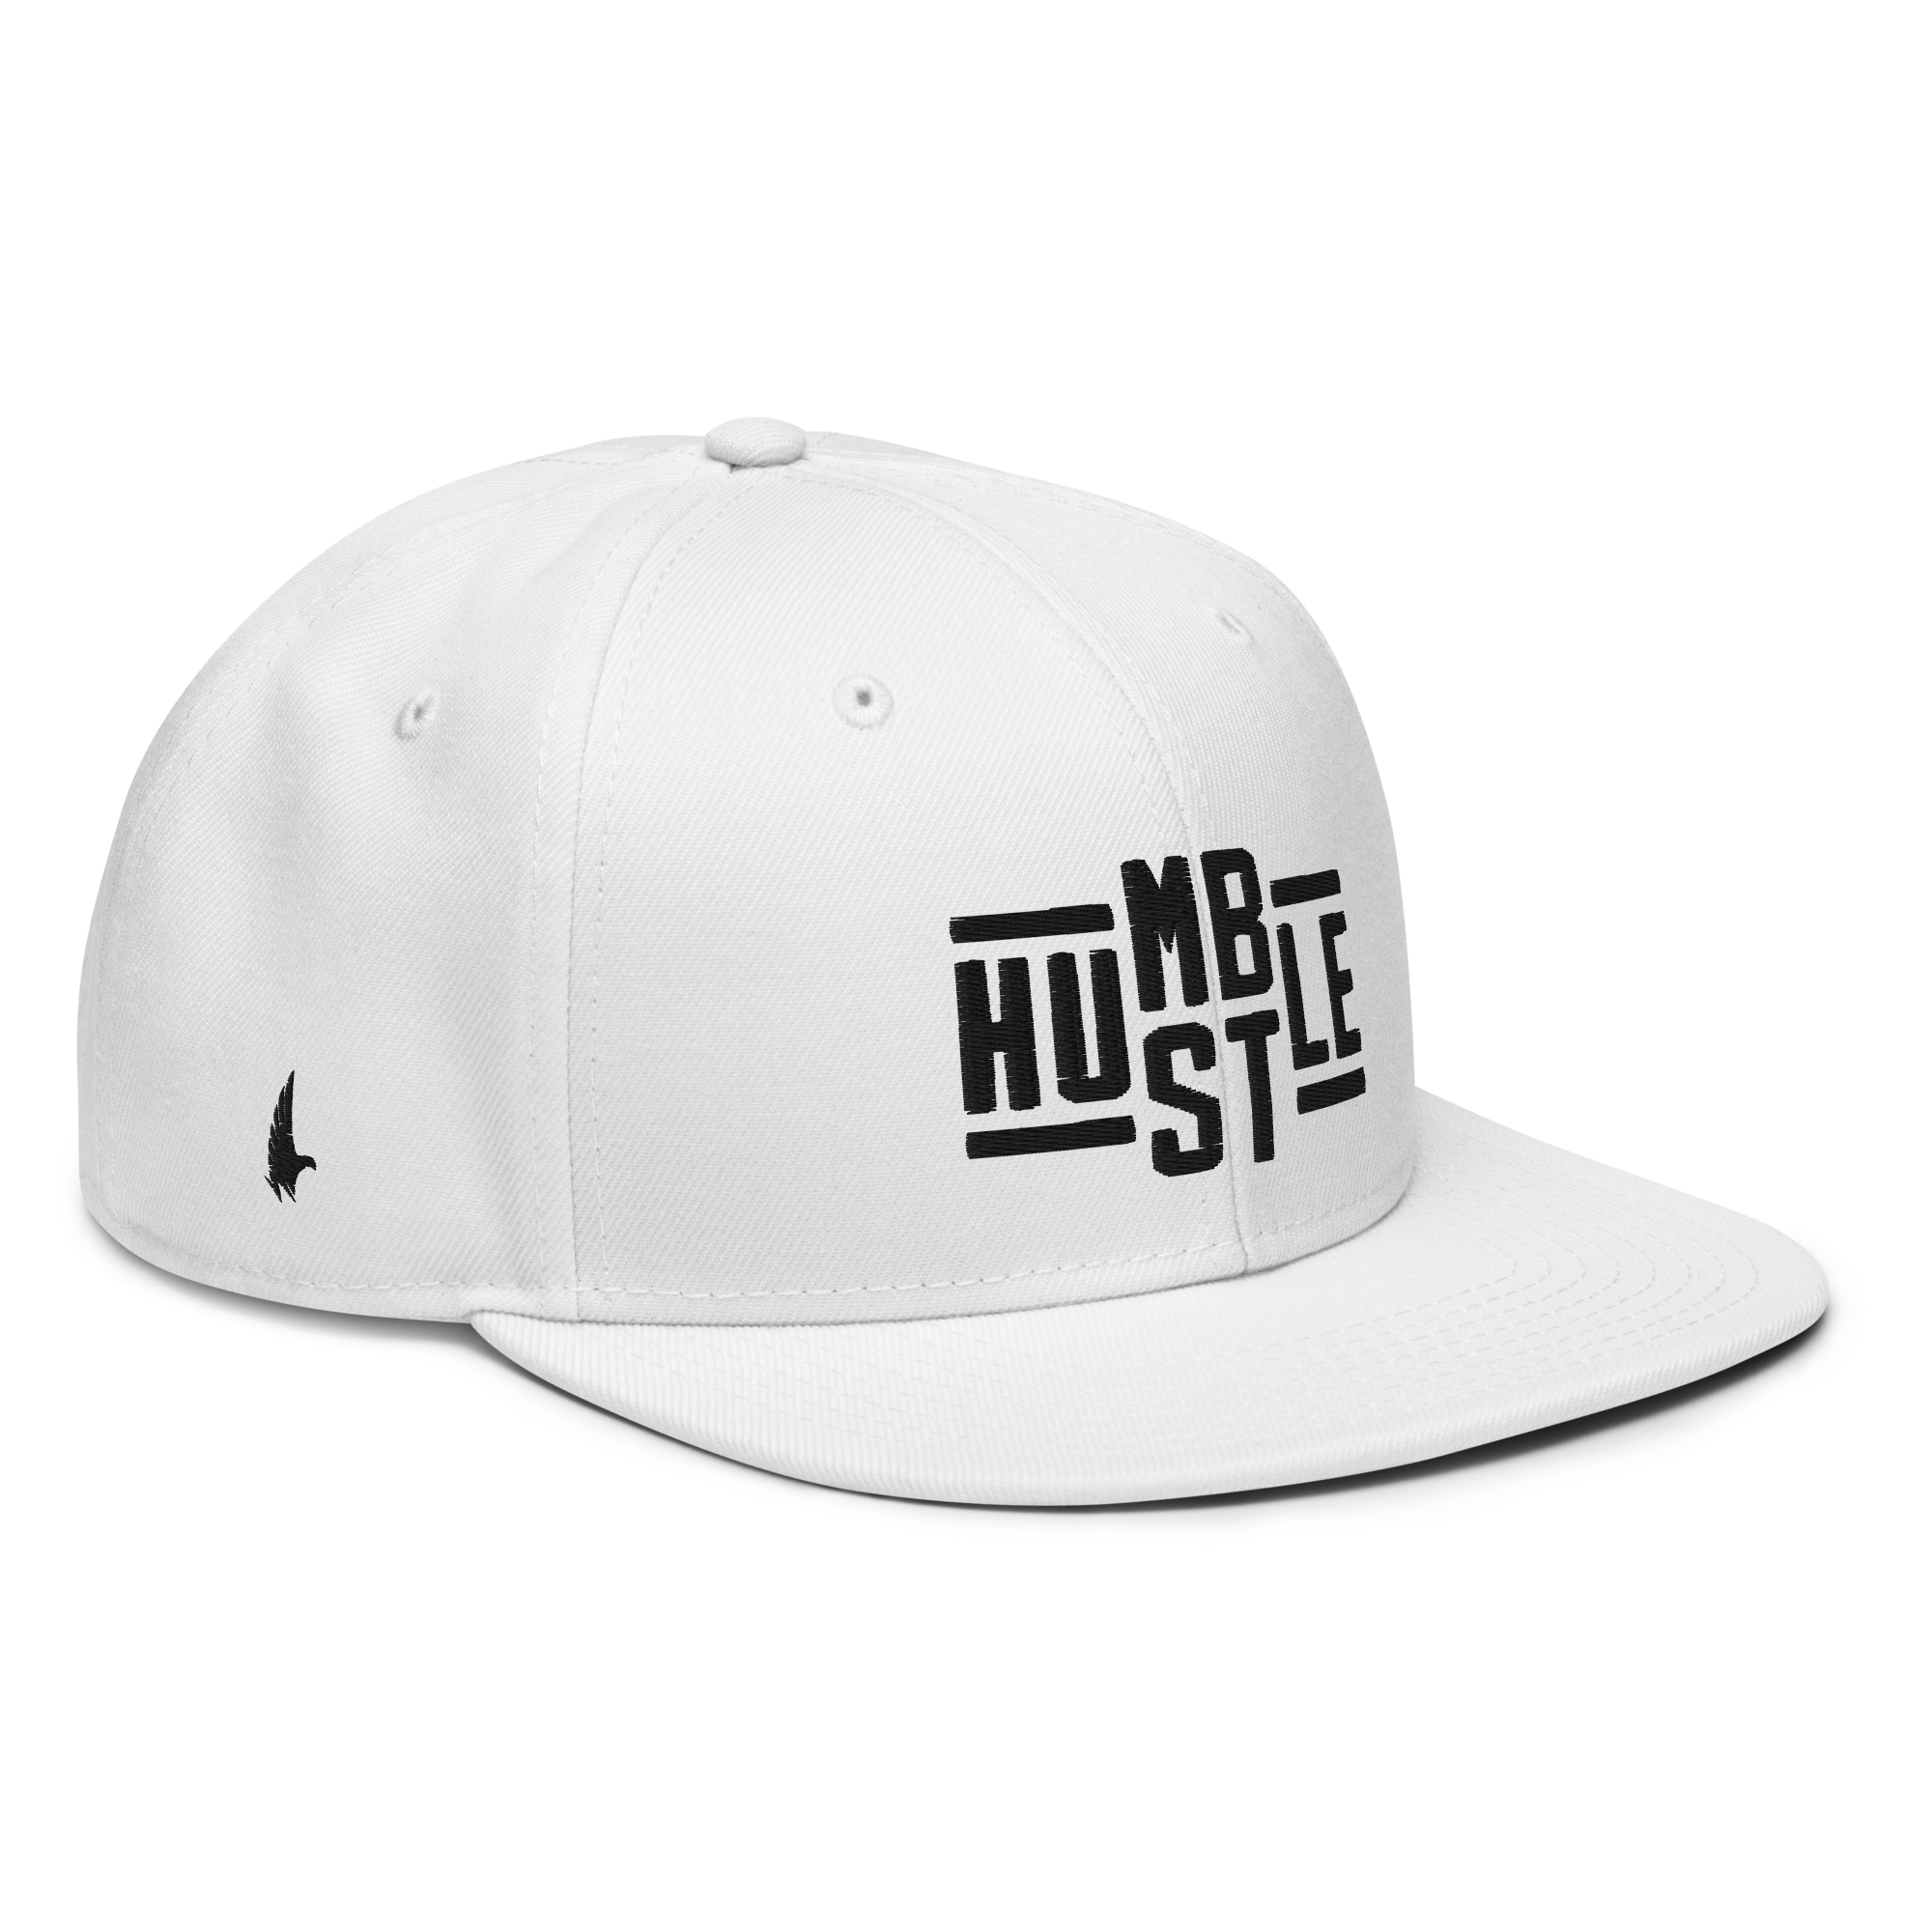 Hustle Snapback Hat - White/Black OS - Loyalty Vibes